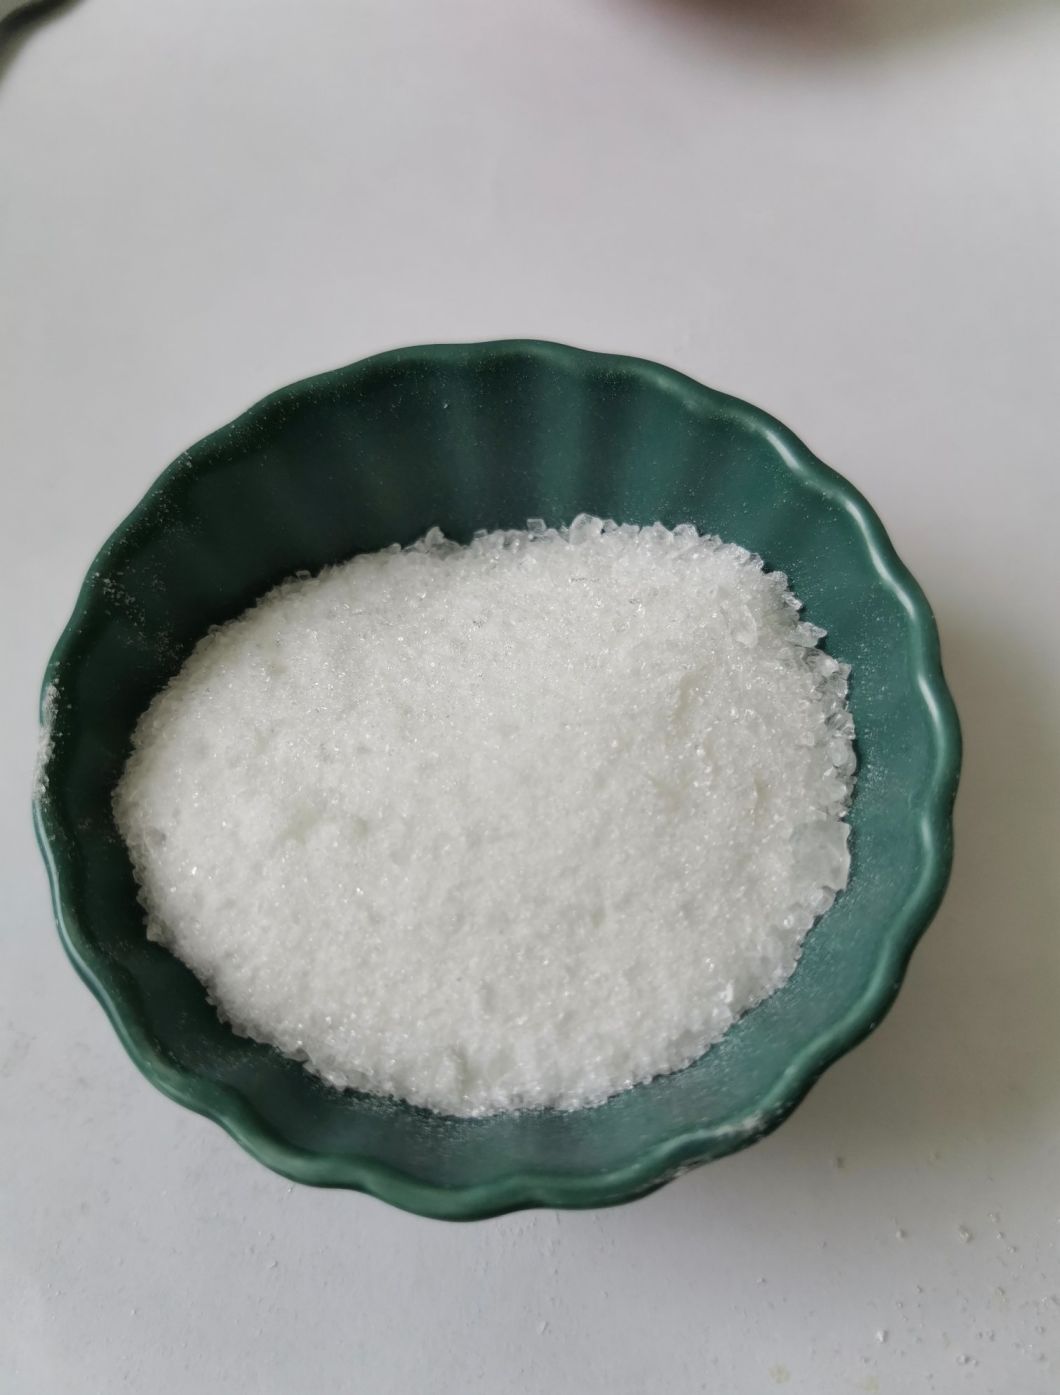 Factory Supply Dimethylamine HCl CAS 506-59-2 Dimethylamine Hydrochloride in Stock for Sale Online